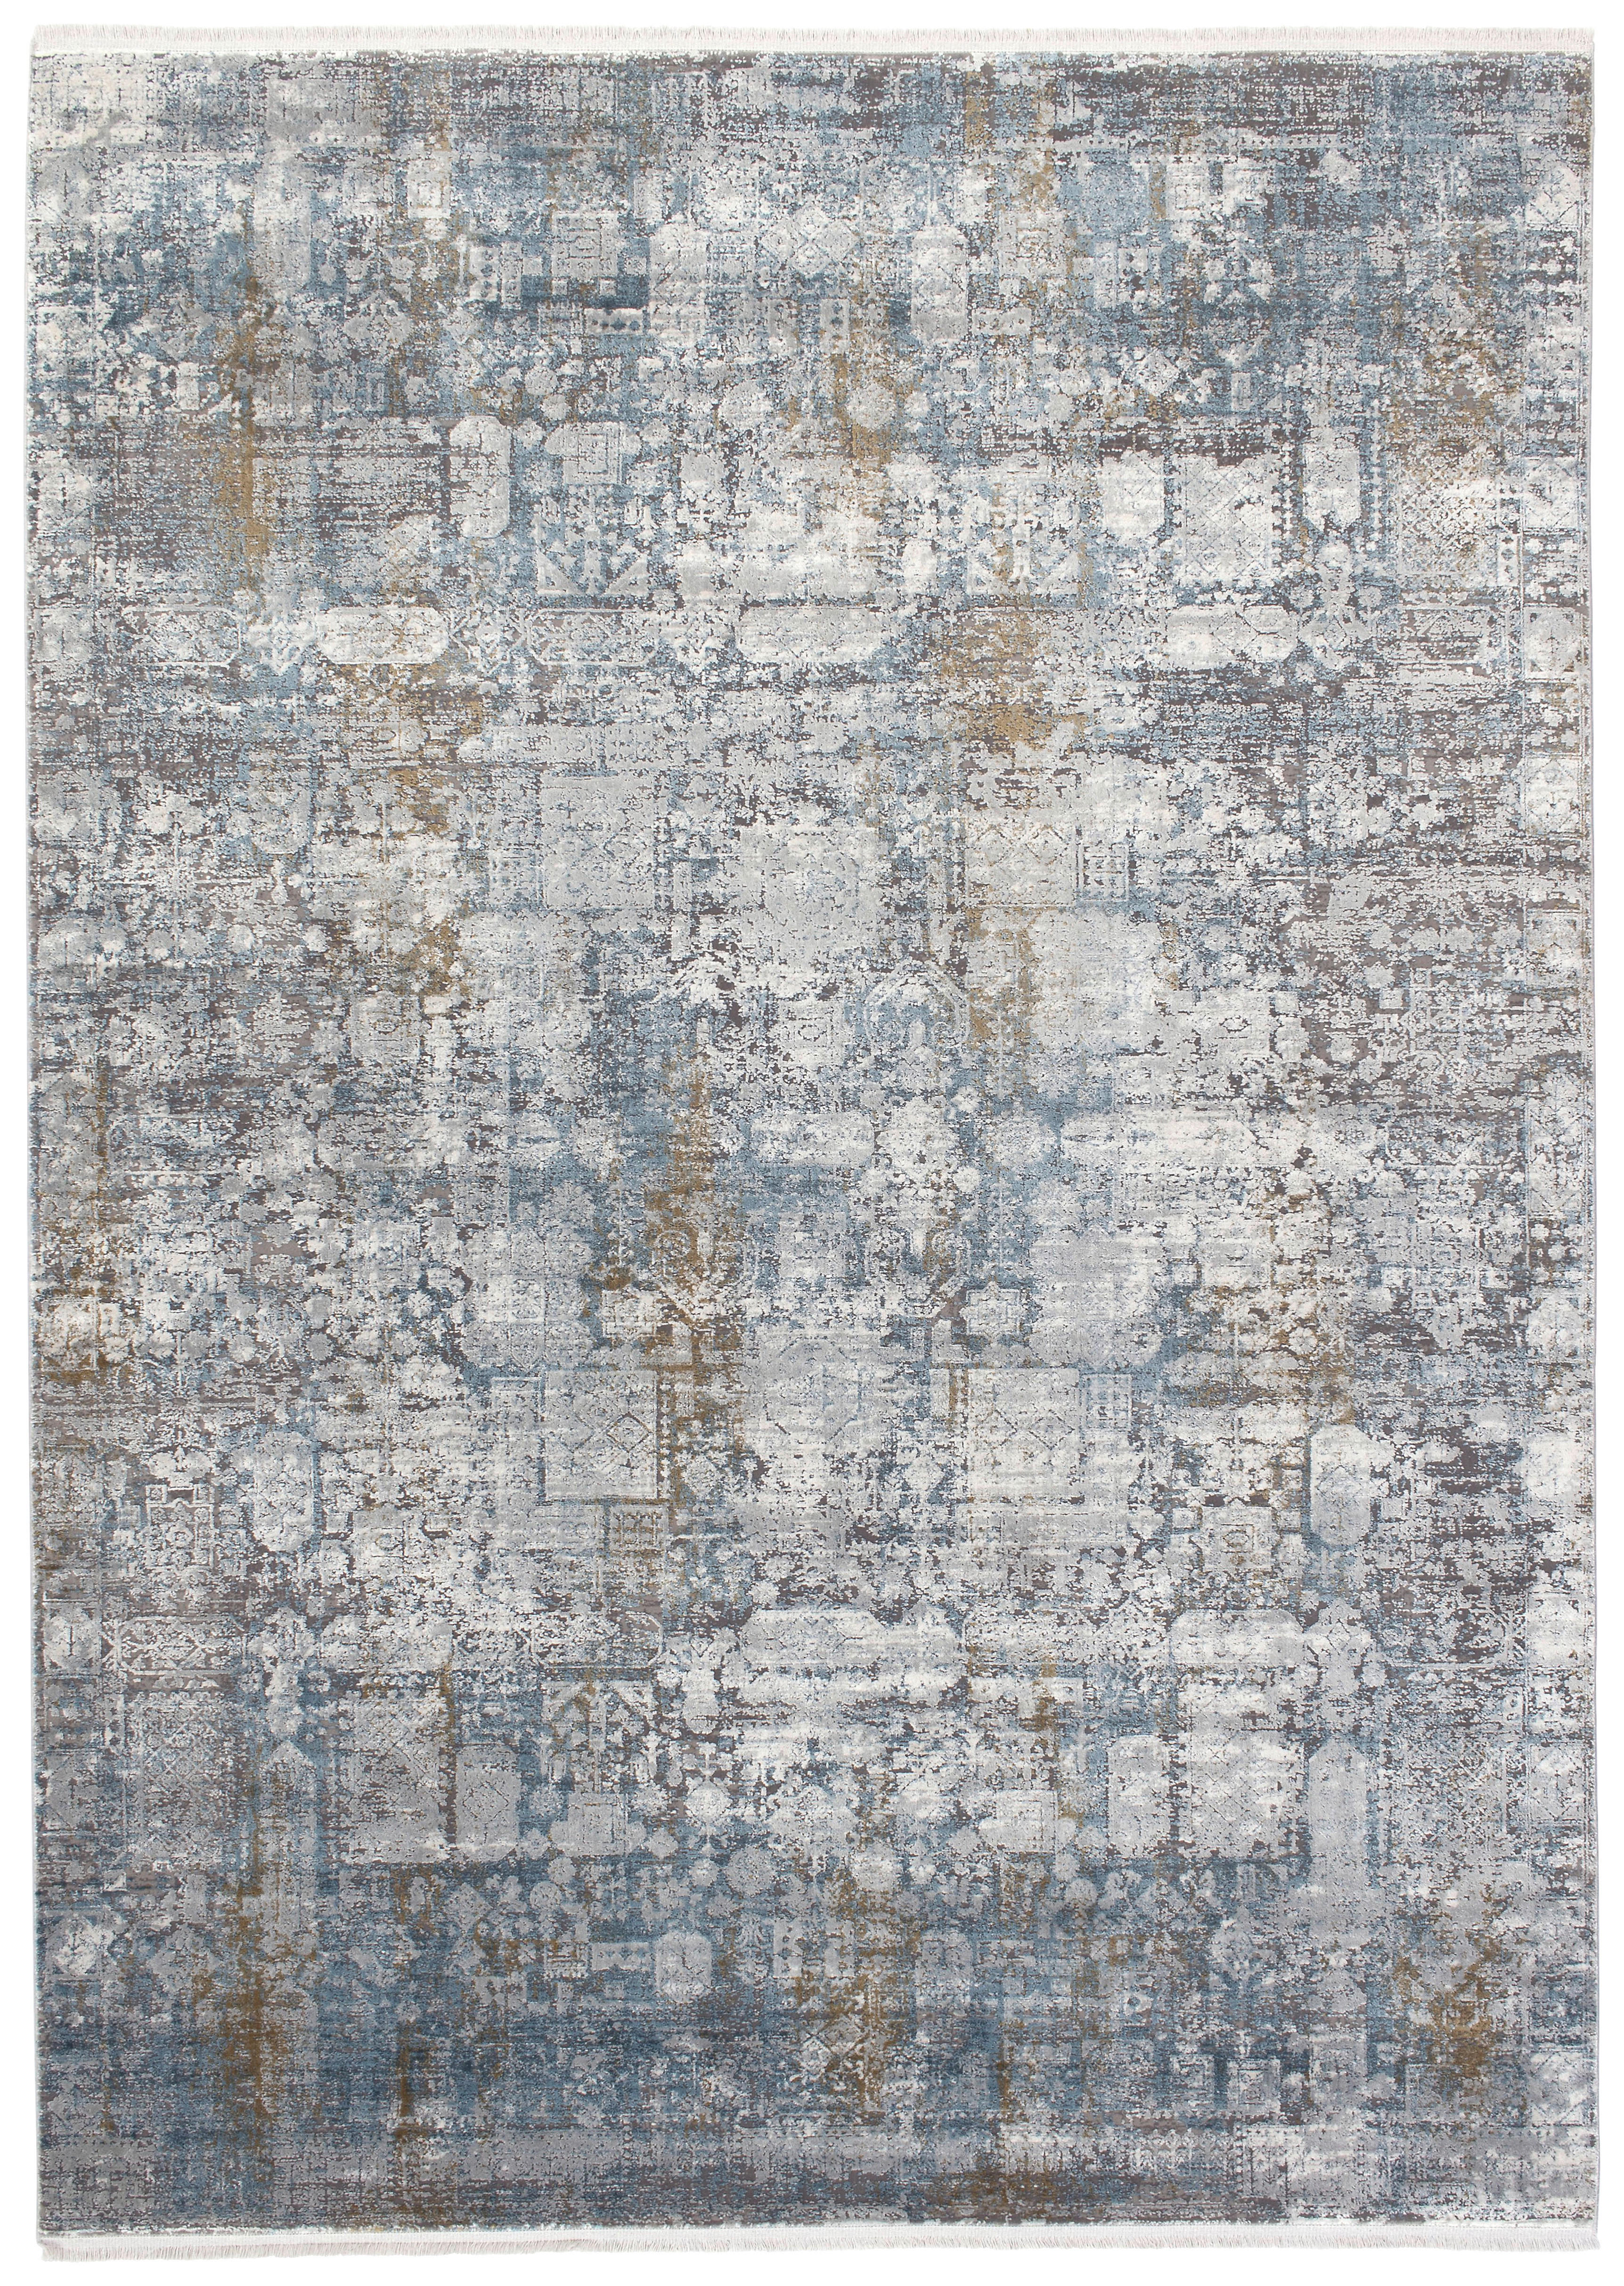 WEBTEPPICH  67/130 cm  Blau, Grau   - Blau/Grau, Design, Textil (67/130cm) - Musterring